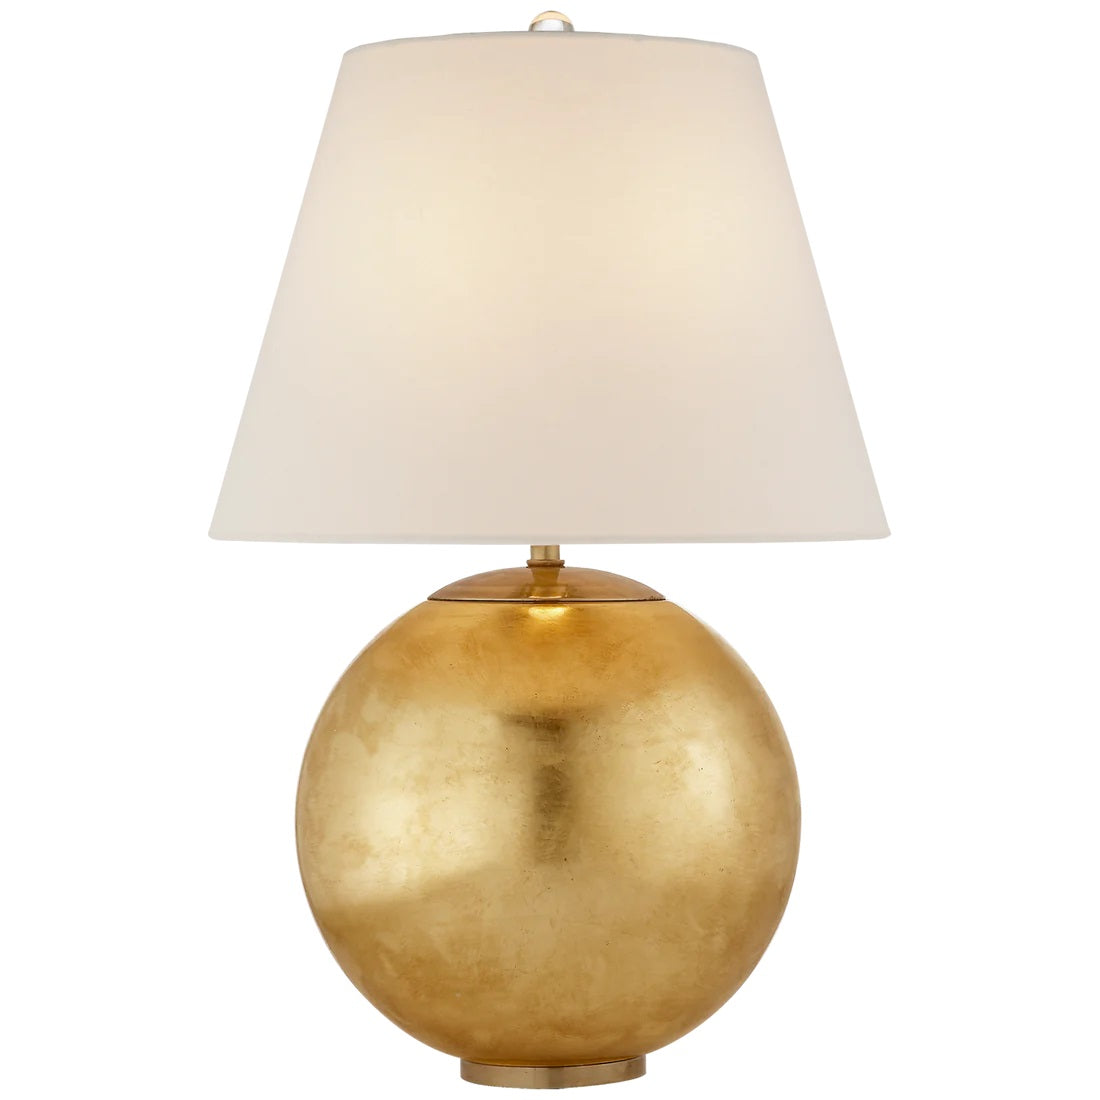 Morton Table Lamp - Clear